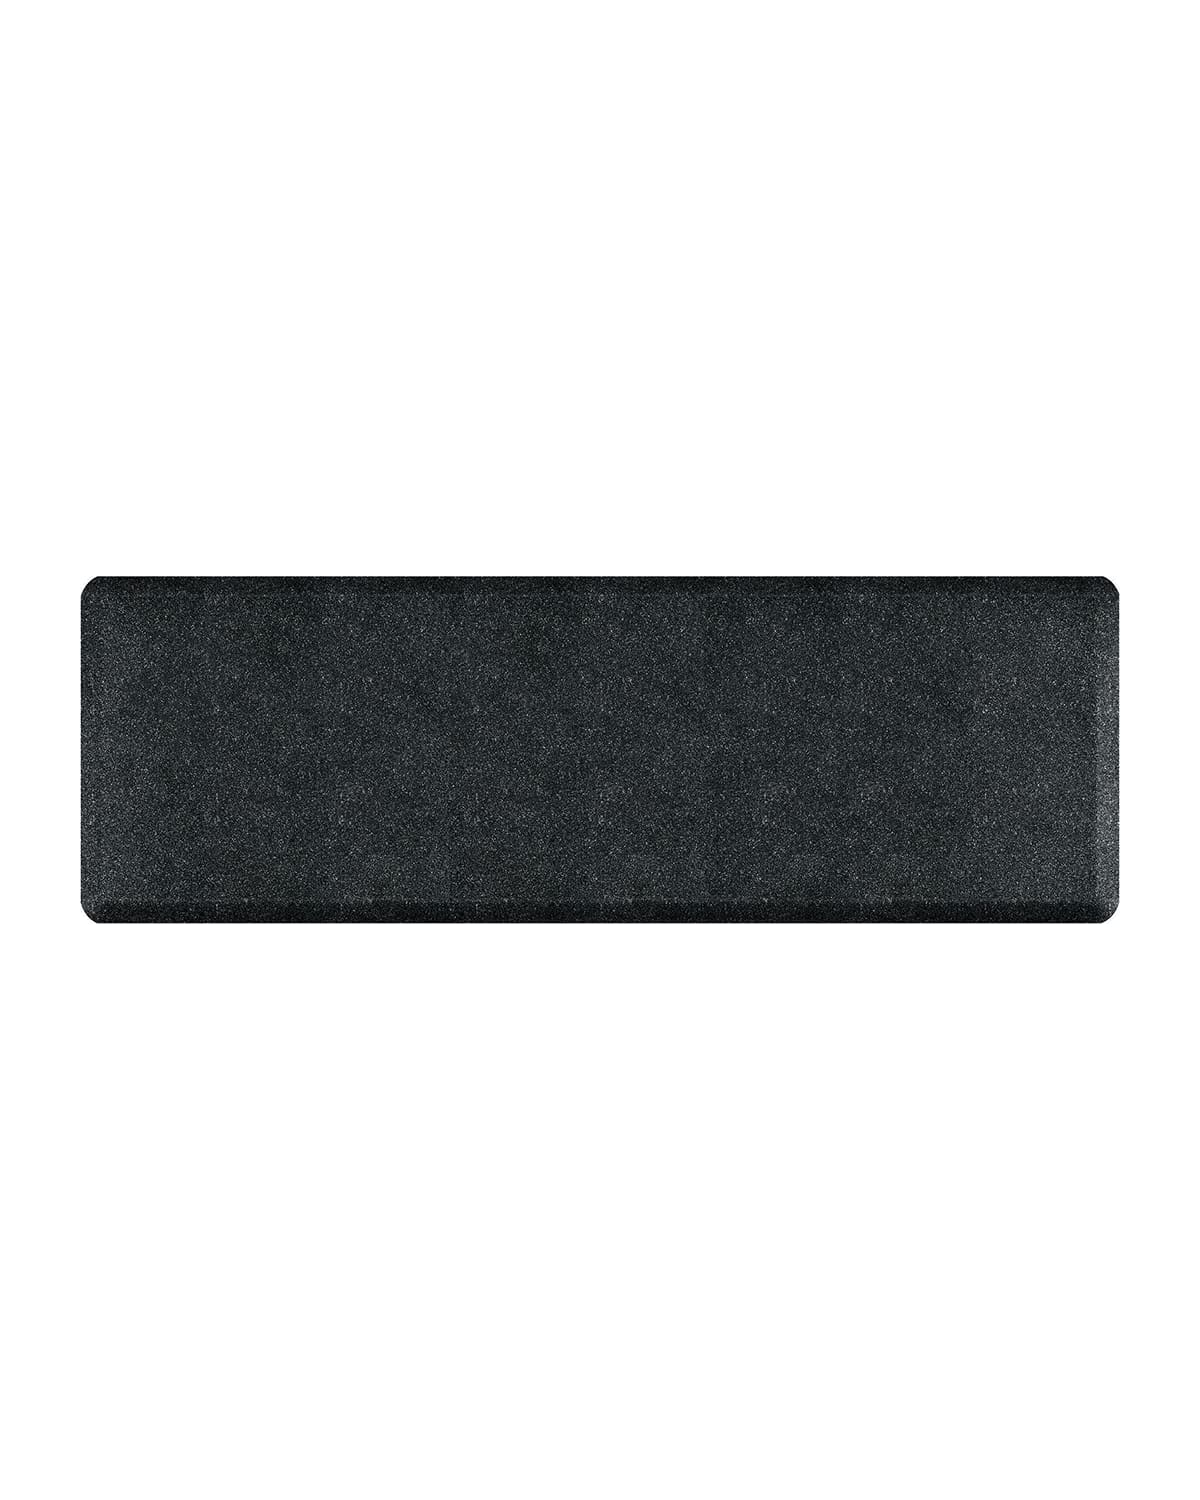 Wellnessmats Granite Anti-fatigue Kitchen Mat, 6' X 2' In Granite Onyx